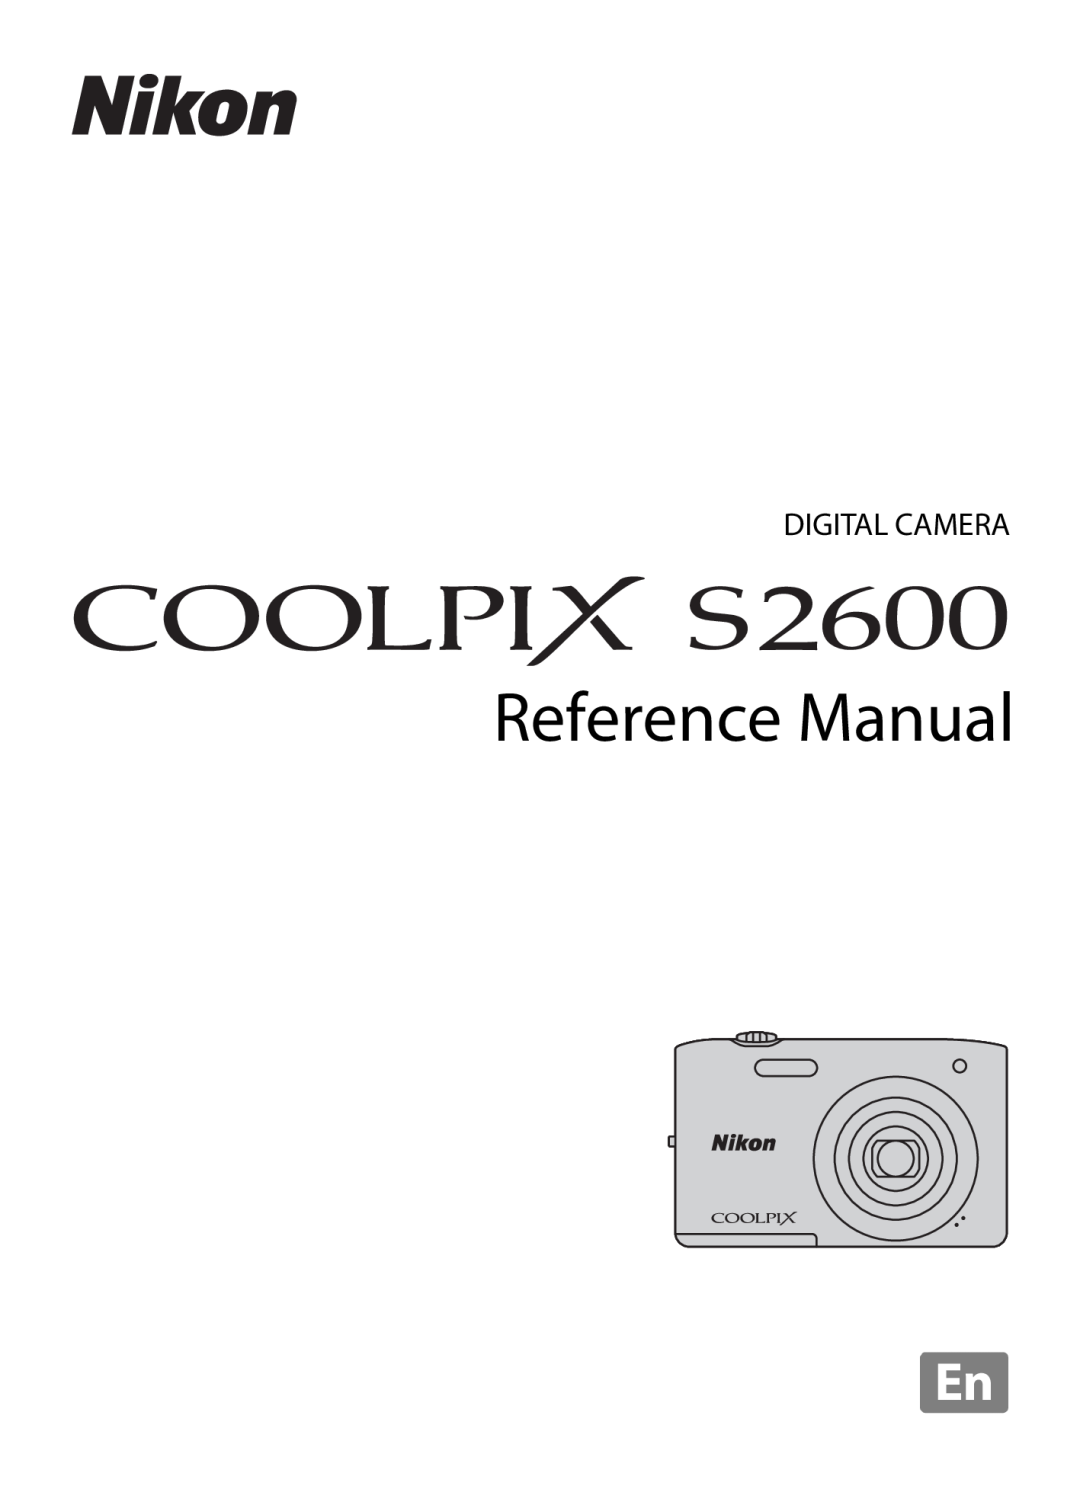 Nikon S2600 manual Reference Manual, Digital Camera 